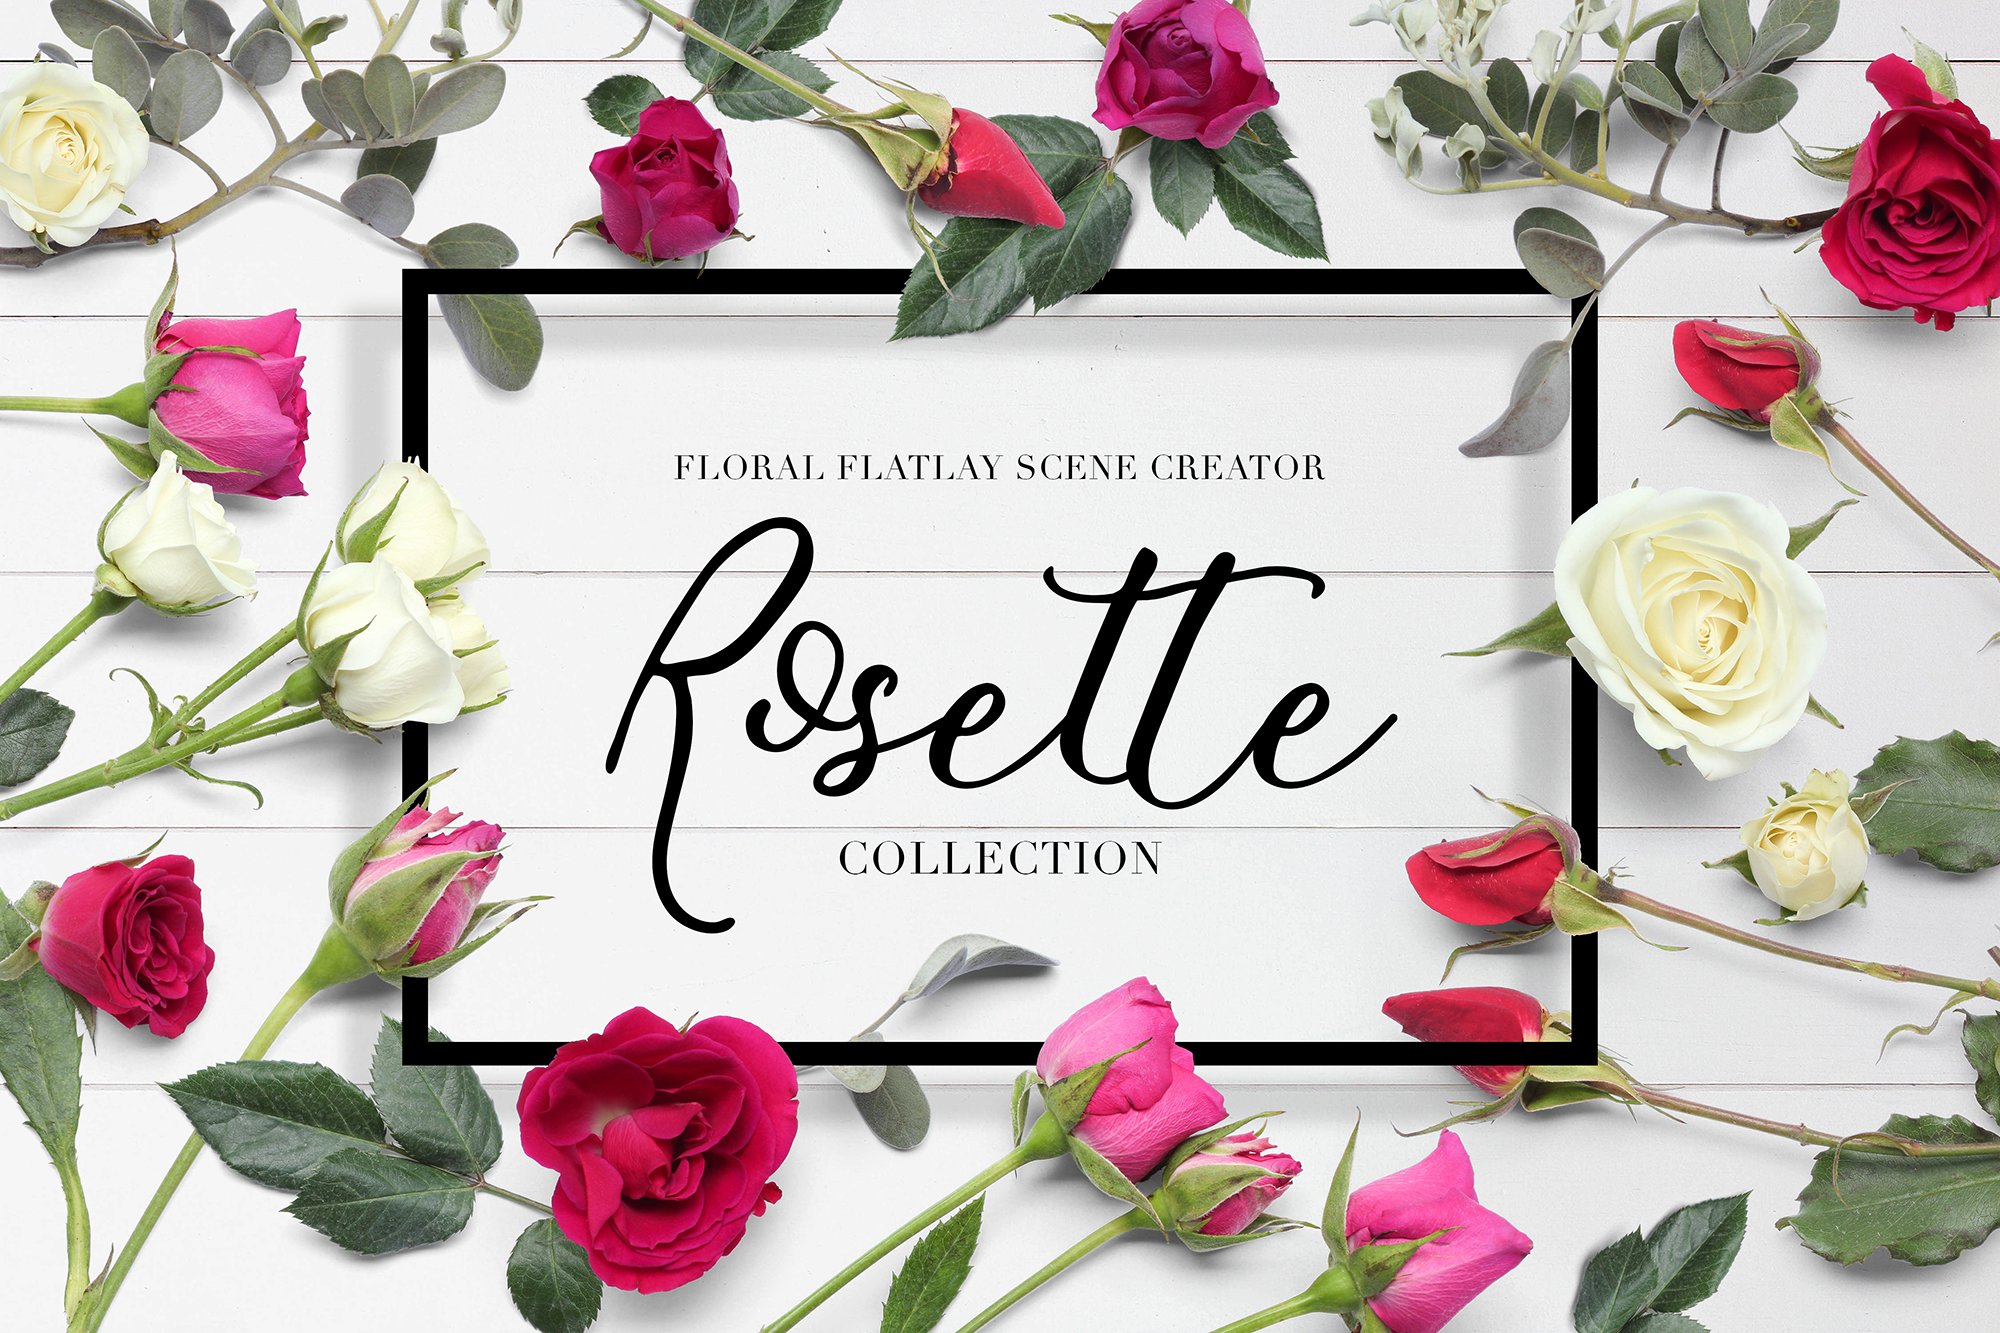 Floral Flatlay Scene Creator Rosette cover image.